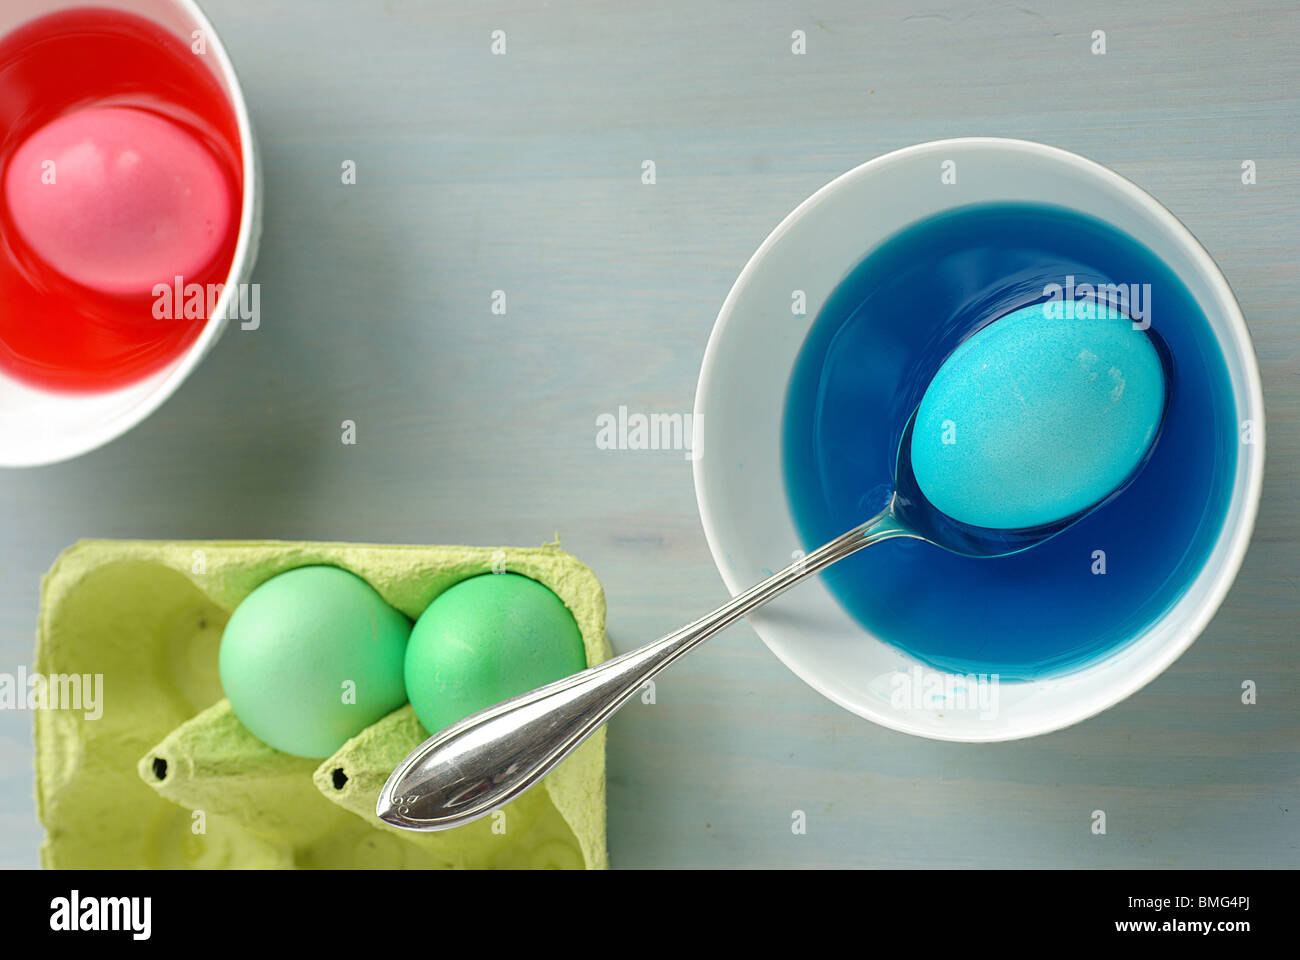 Huevos de Pascua está teñido en varios tazones de tintes de colores brillantes, Vertical Foto de stock